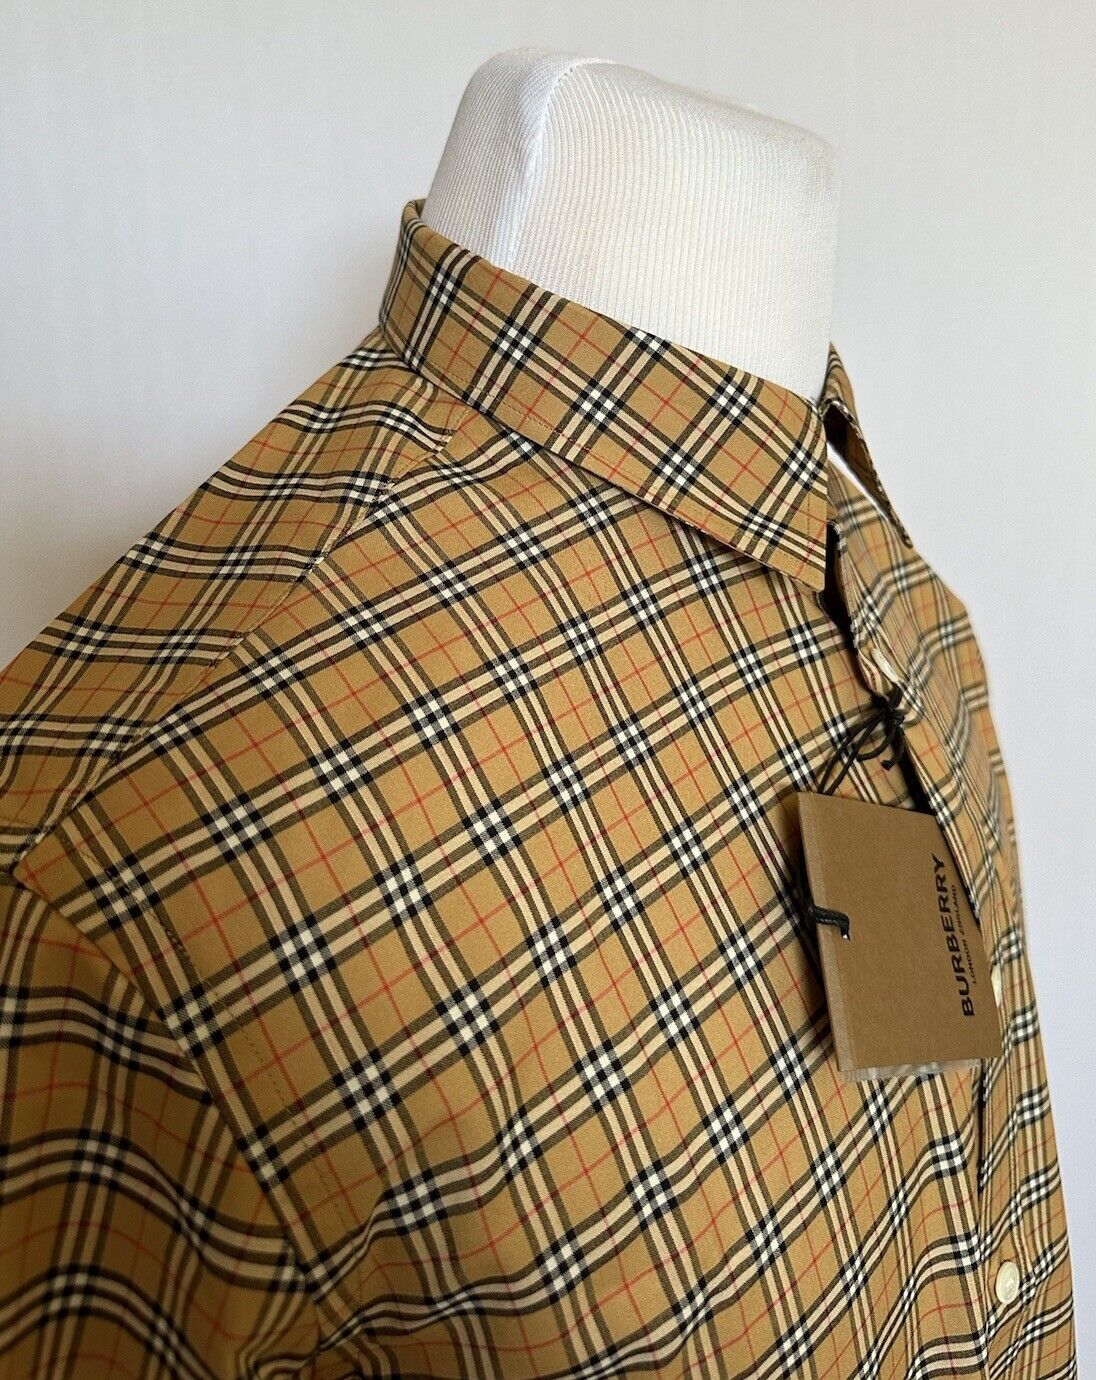 Burberry Edward Antique Yellow IP Check Mens Cotton Short Sleeve Shirt L 8003852